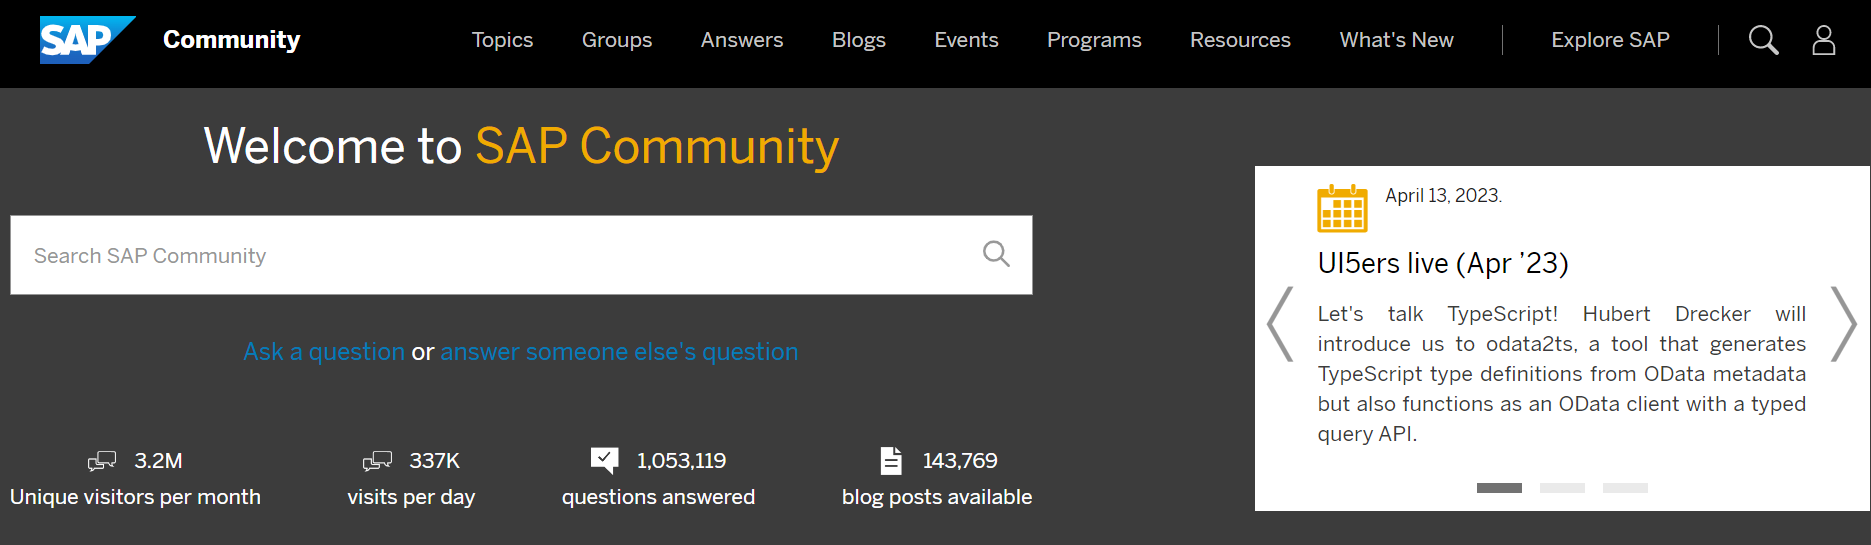 SAP Community Snapshot